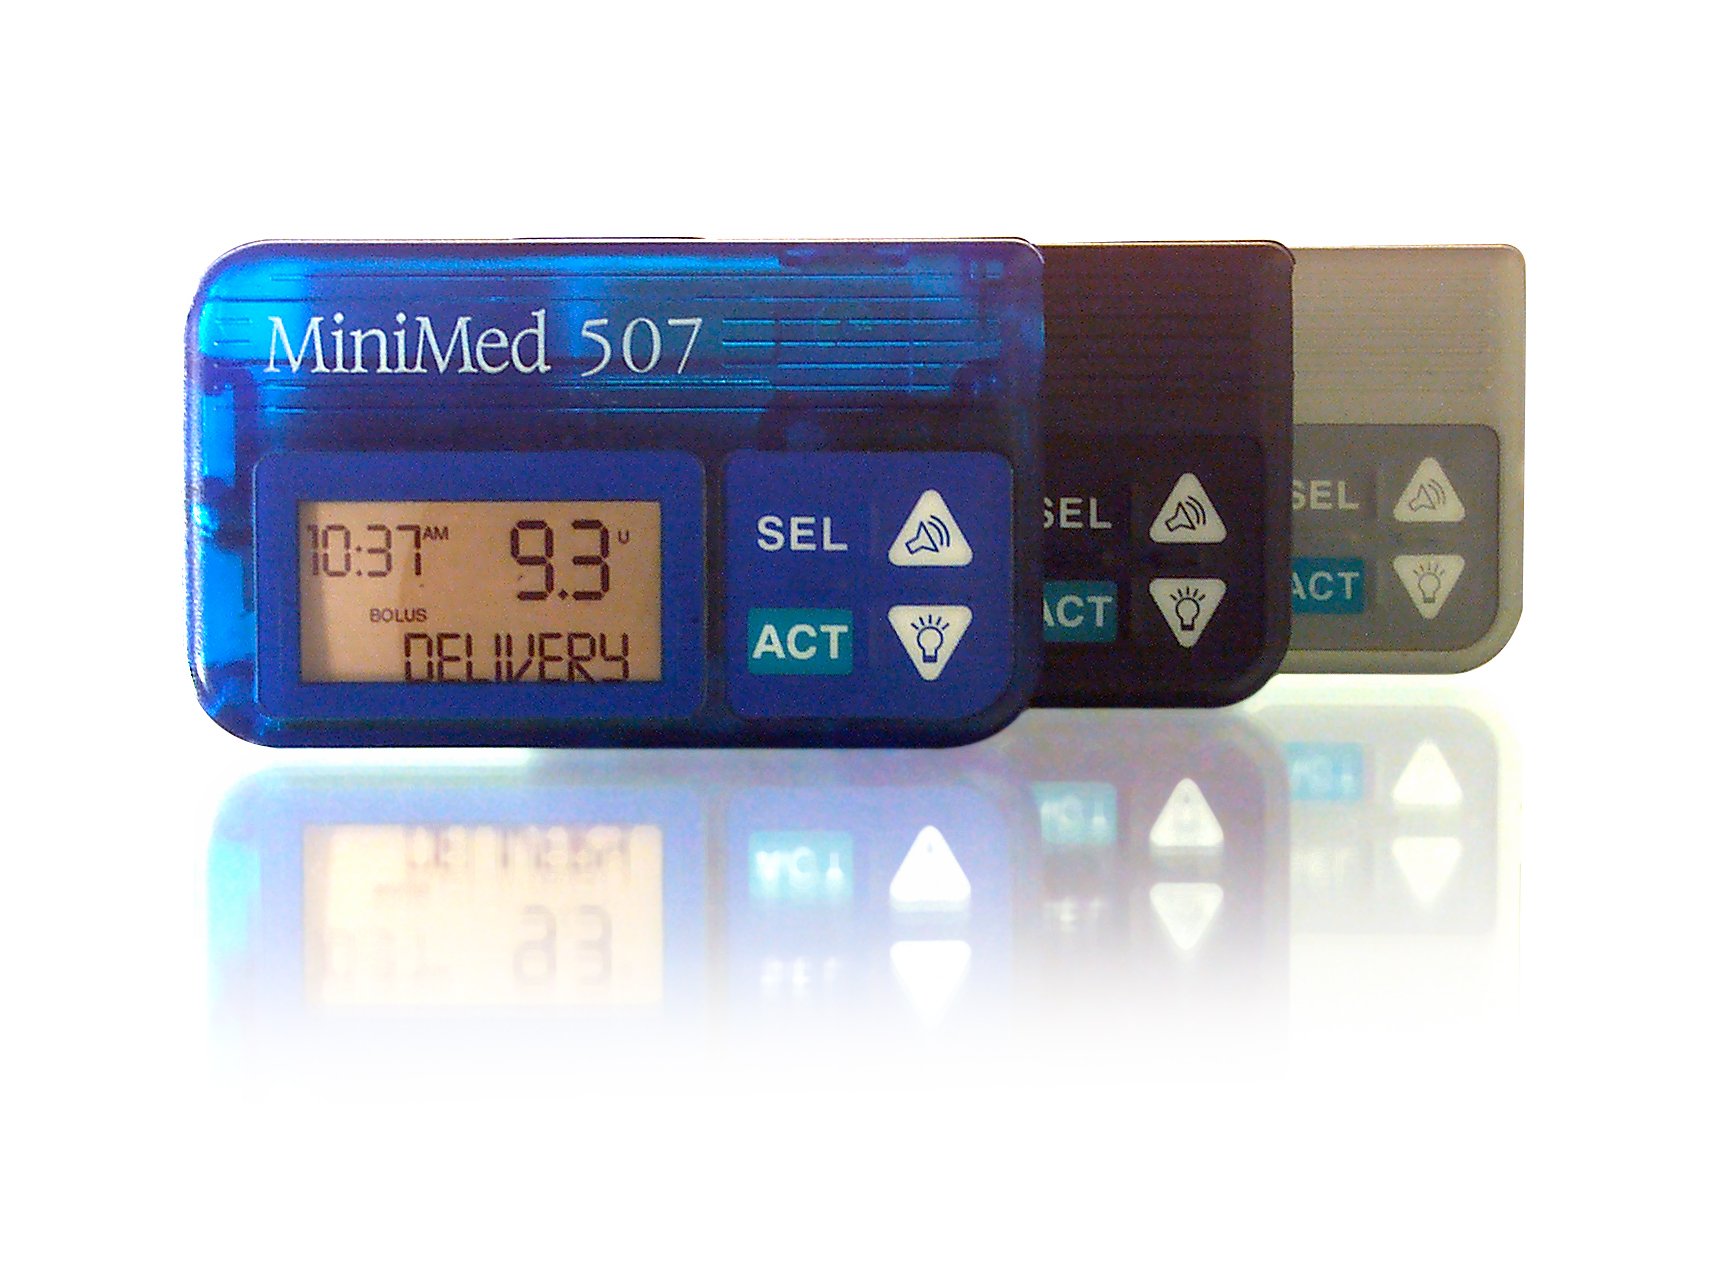 MiniMed 507 Insulin Pump (now Medtronic)